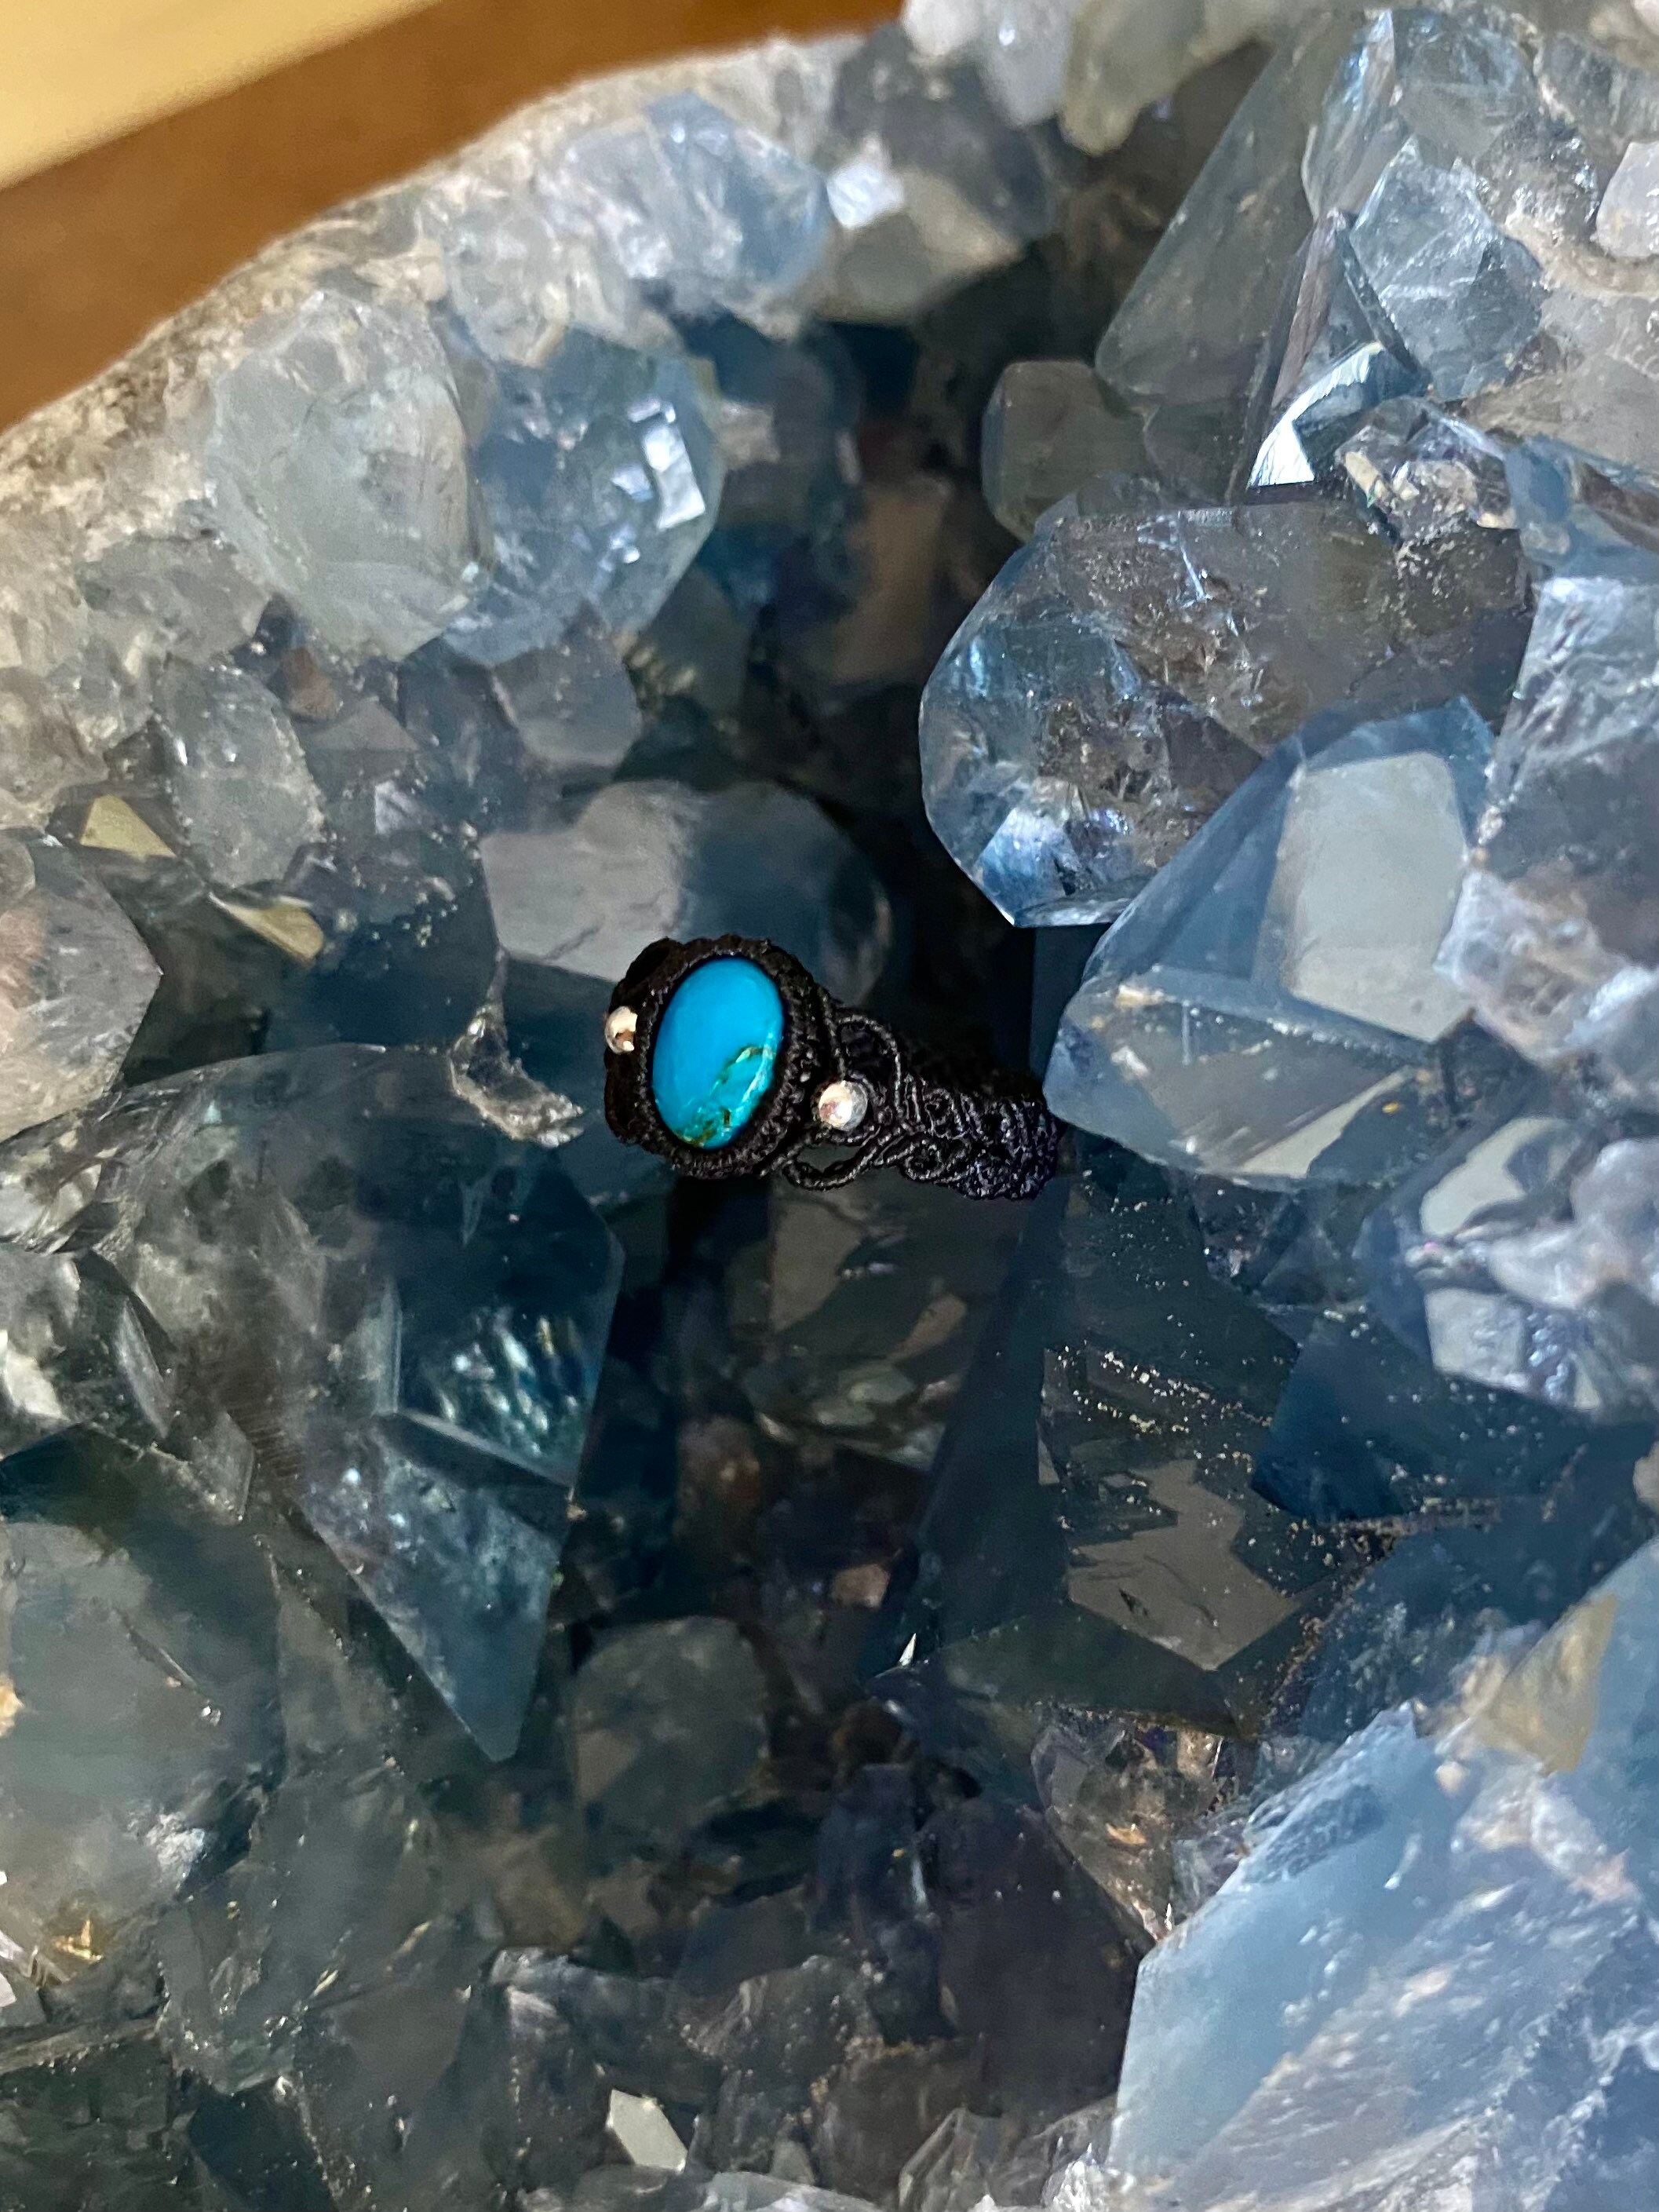 Black Macrame Ring with Turquoise Gemstones Handmade Macrame Jewelry –  ElvysCreations